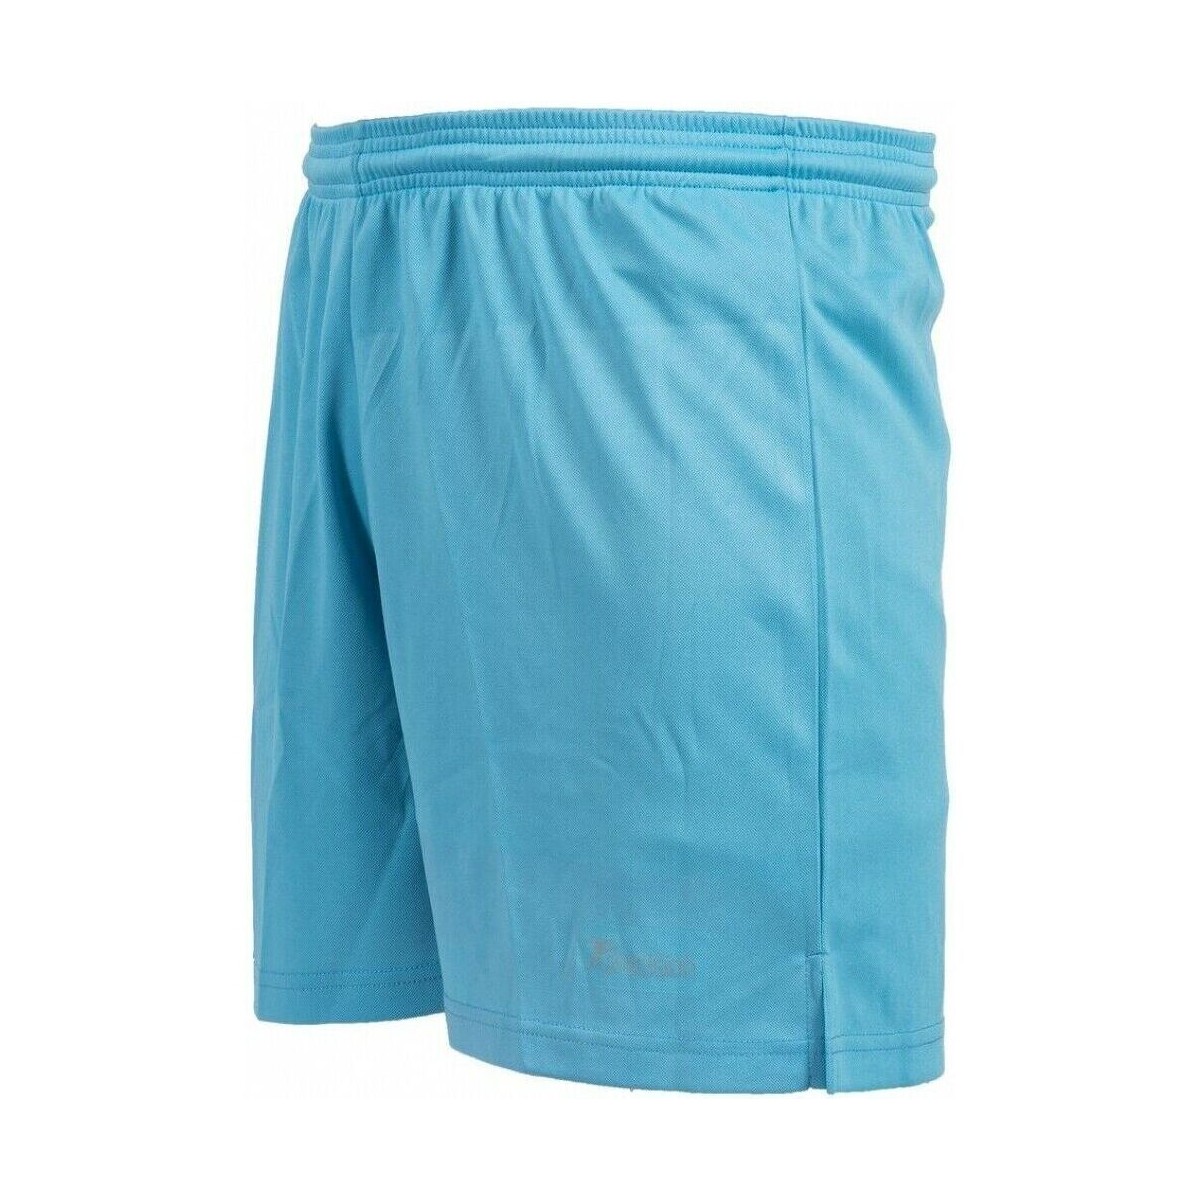 Vêtements Enfant Shorts / Bermudas Precision Madrid Bleu